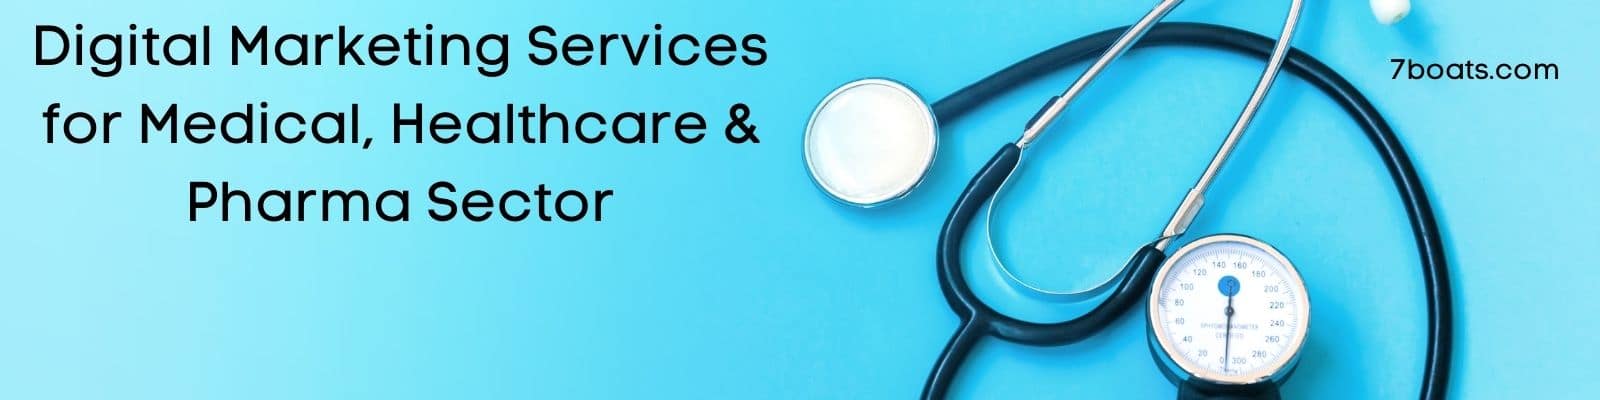 Digital Marketing Services for Medical, Healthcare & Pharma Sector